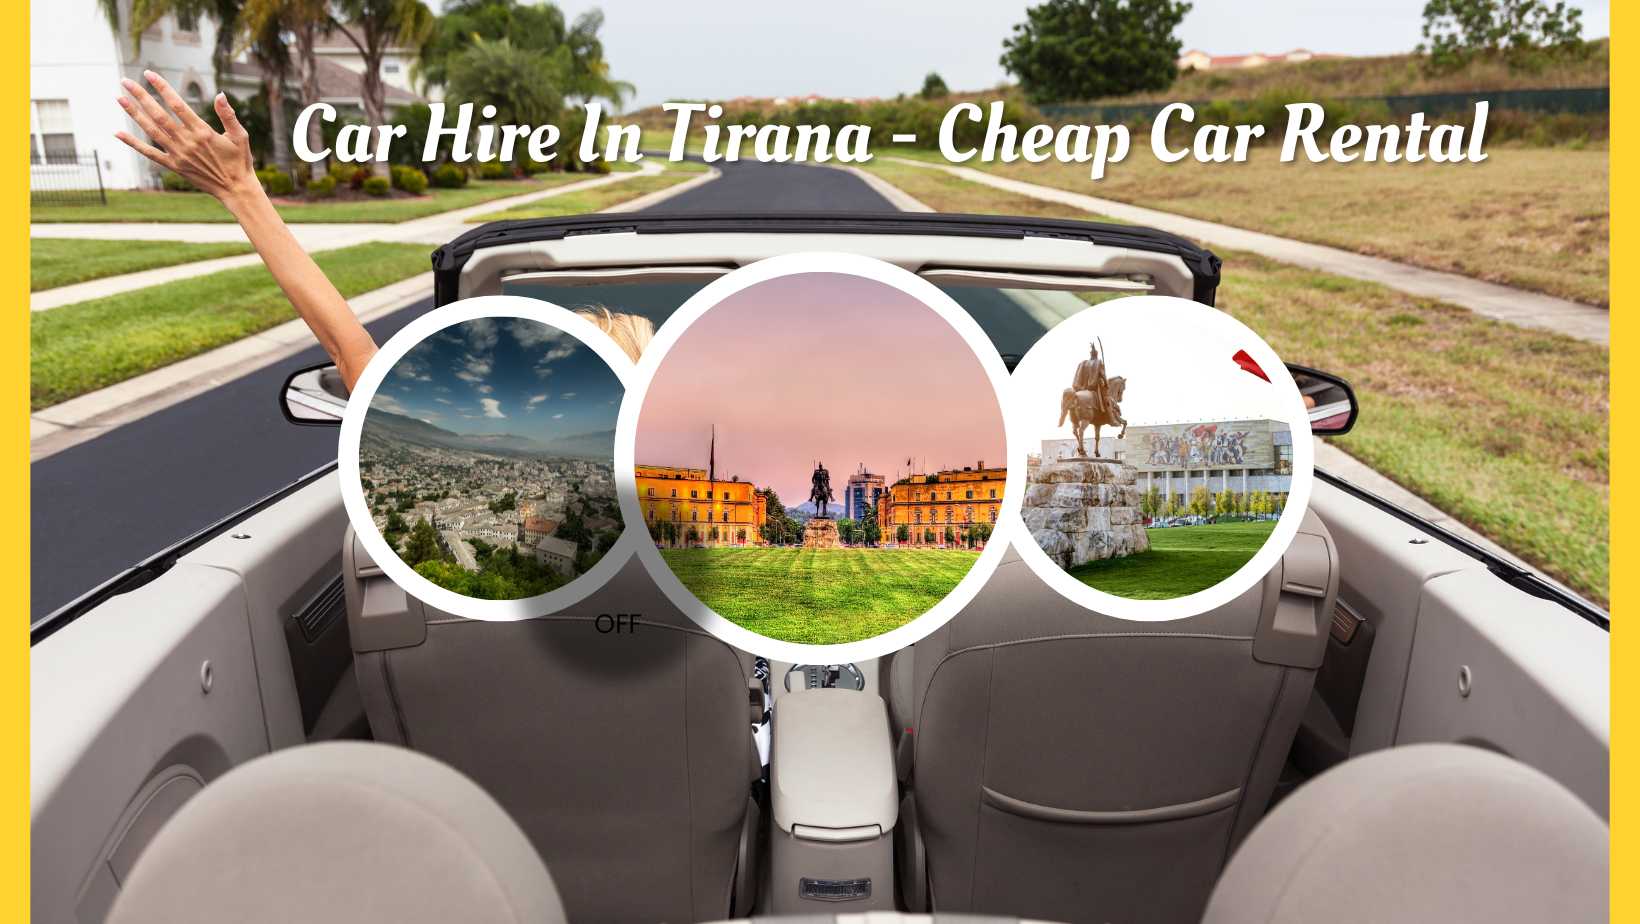 Car Hire In Tirana - Cheap Car Rental